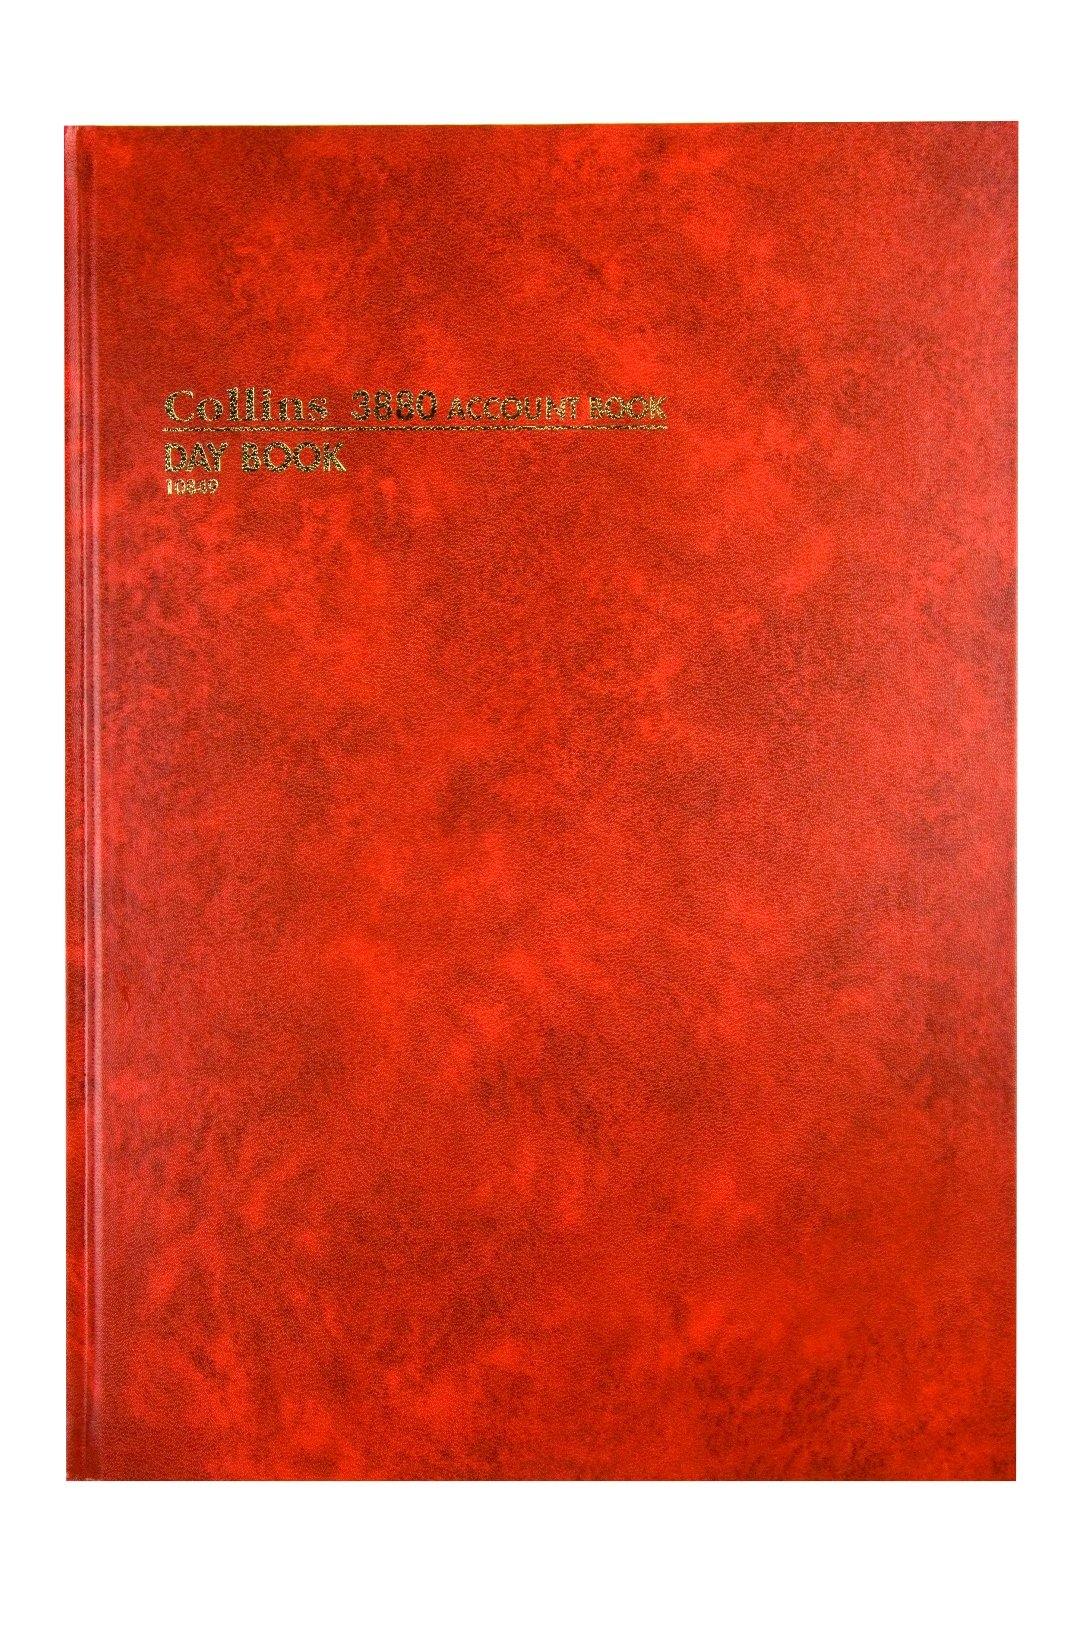 Account Book '3880' Series Day Book - Collins Debden